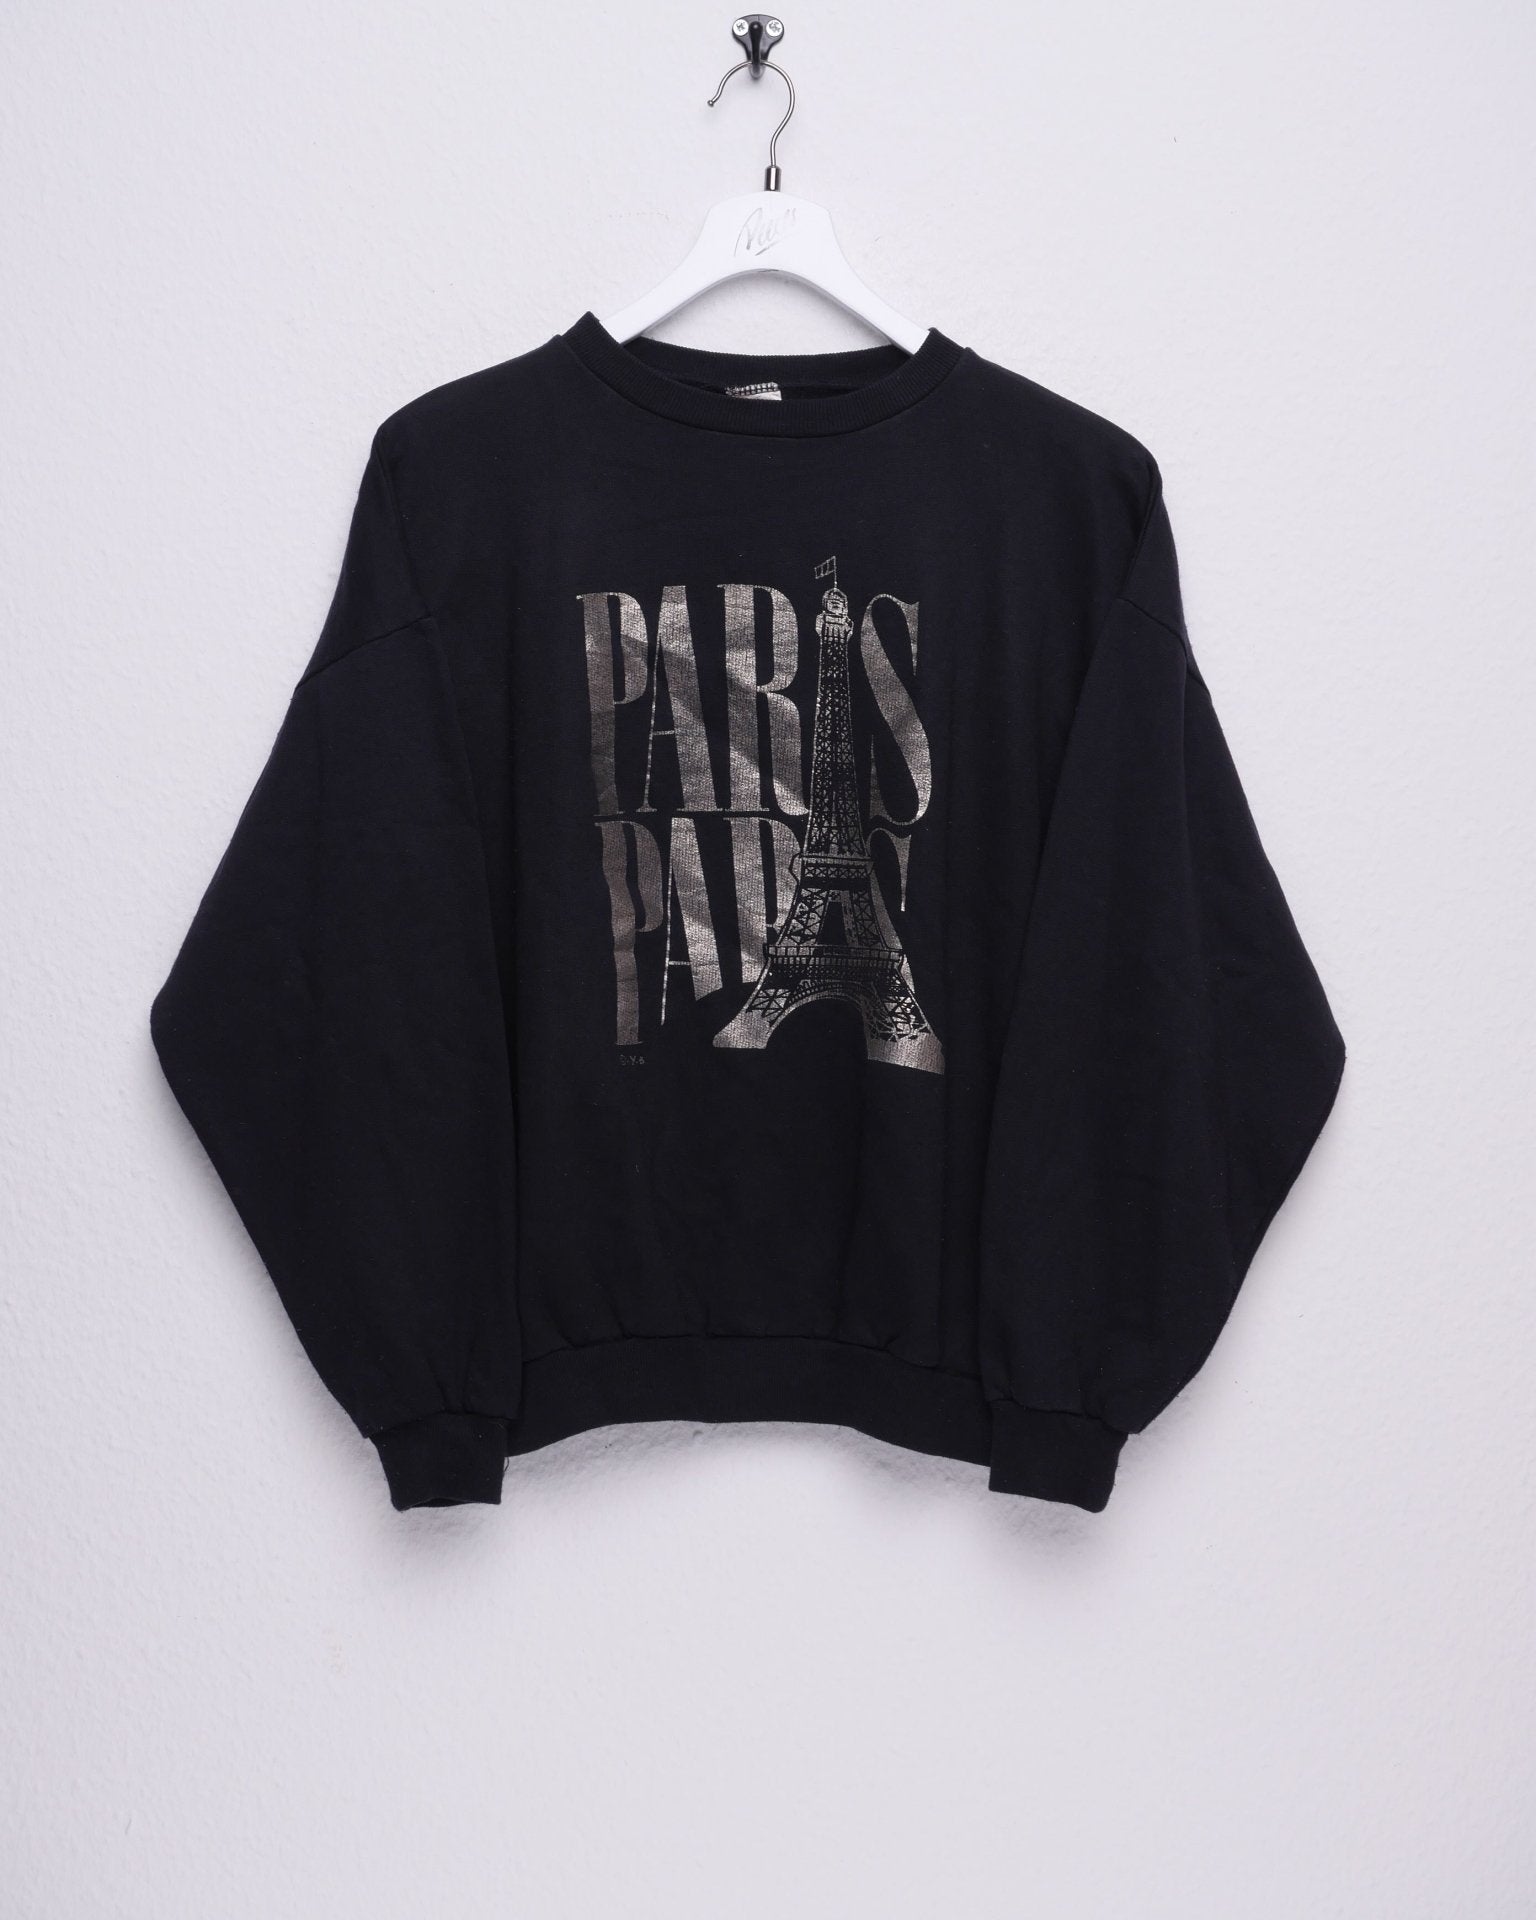 'Paris Paris' printed Spellout black Sweater - Peeces